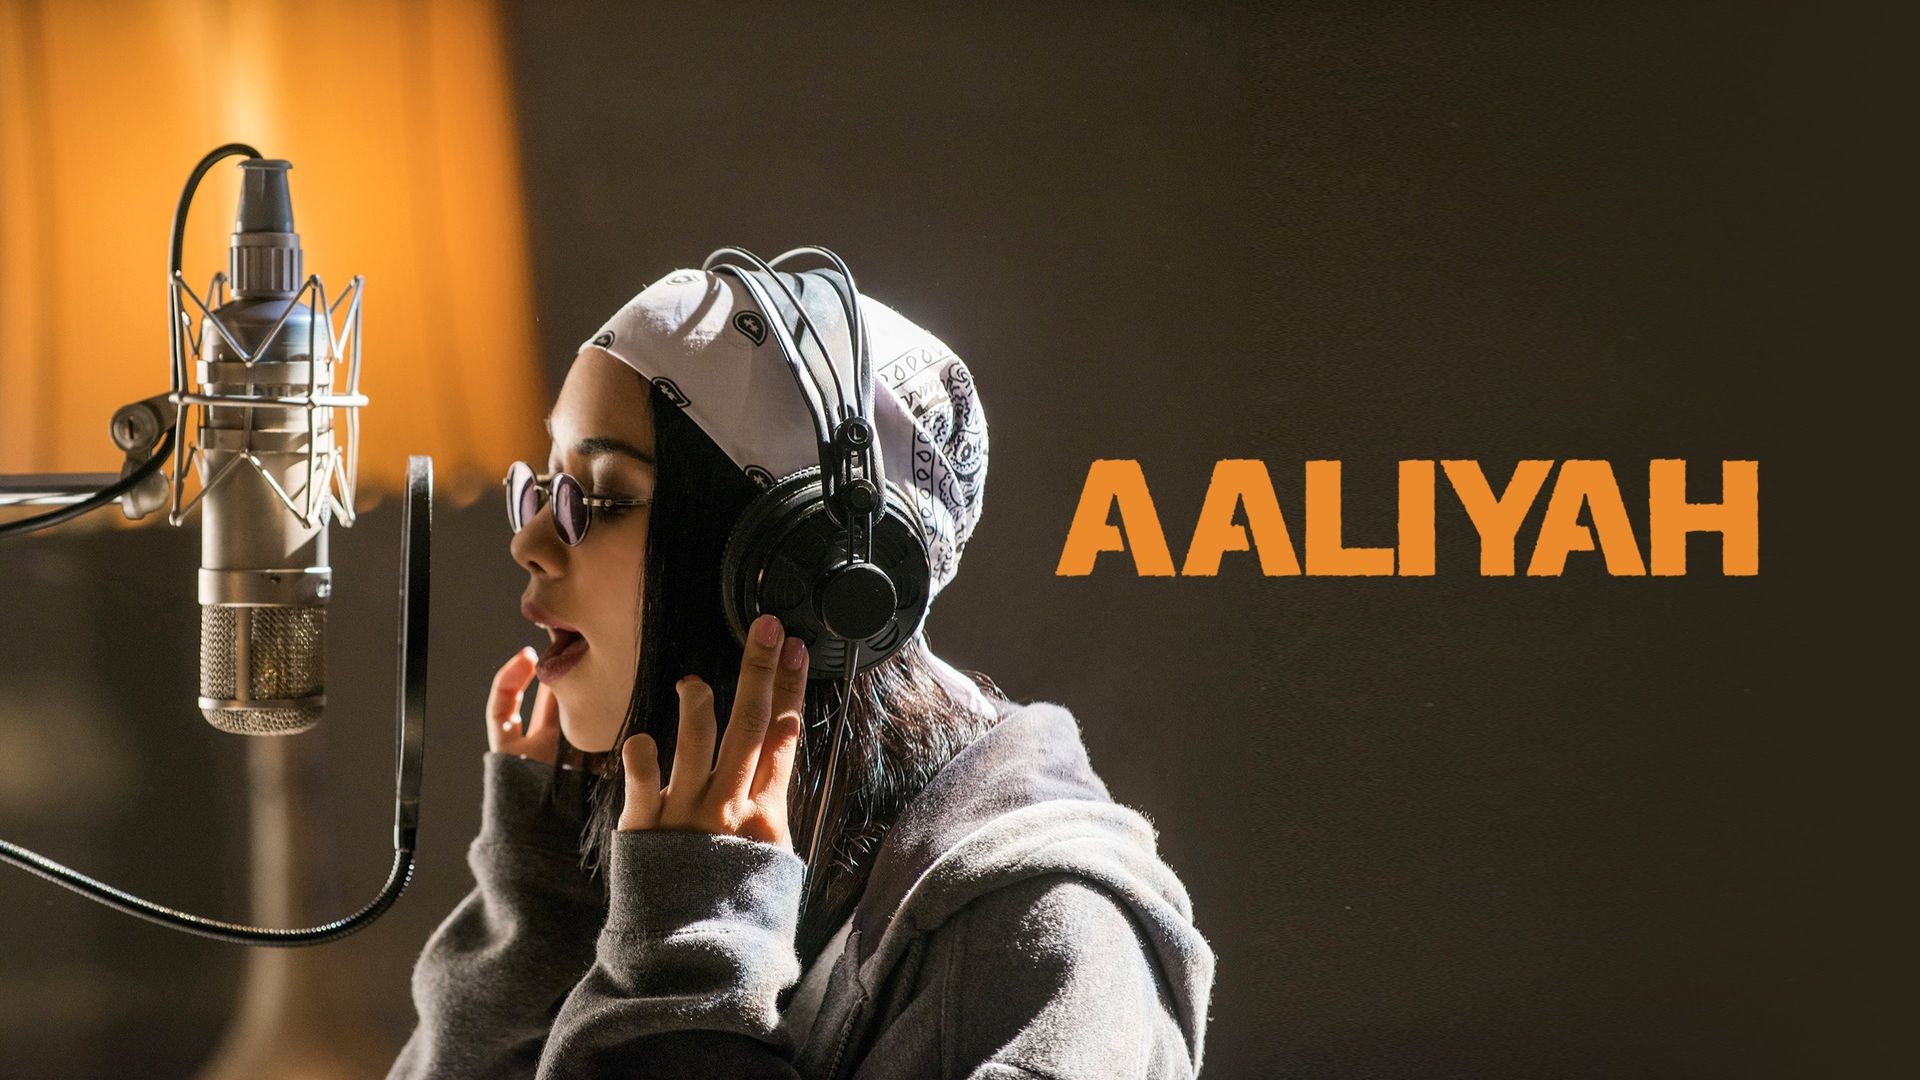 Aaliyah: The Princess of R&B background